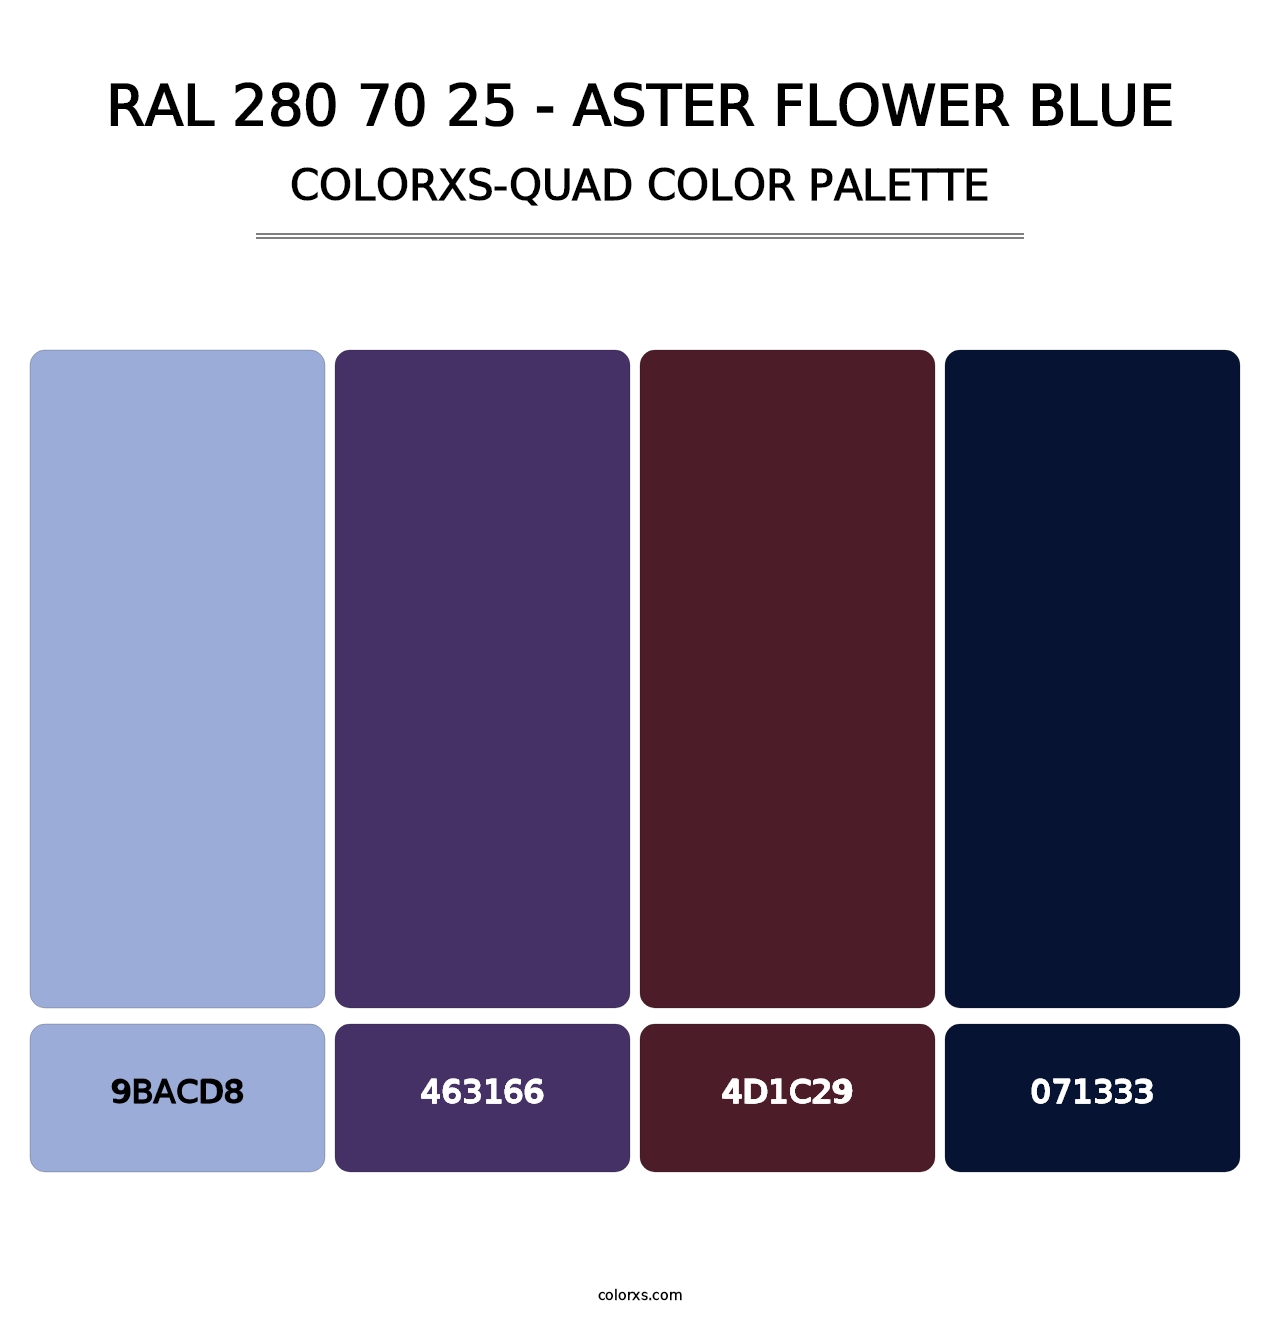 RAL 280 70 25 - Aster Flower Blue - Colorxs Quad Palette